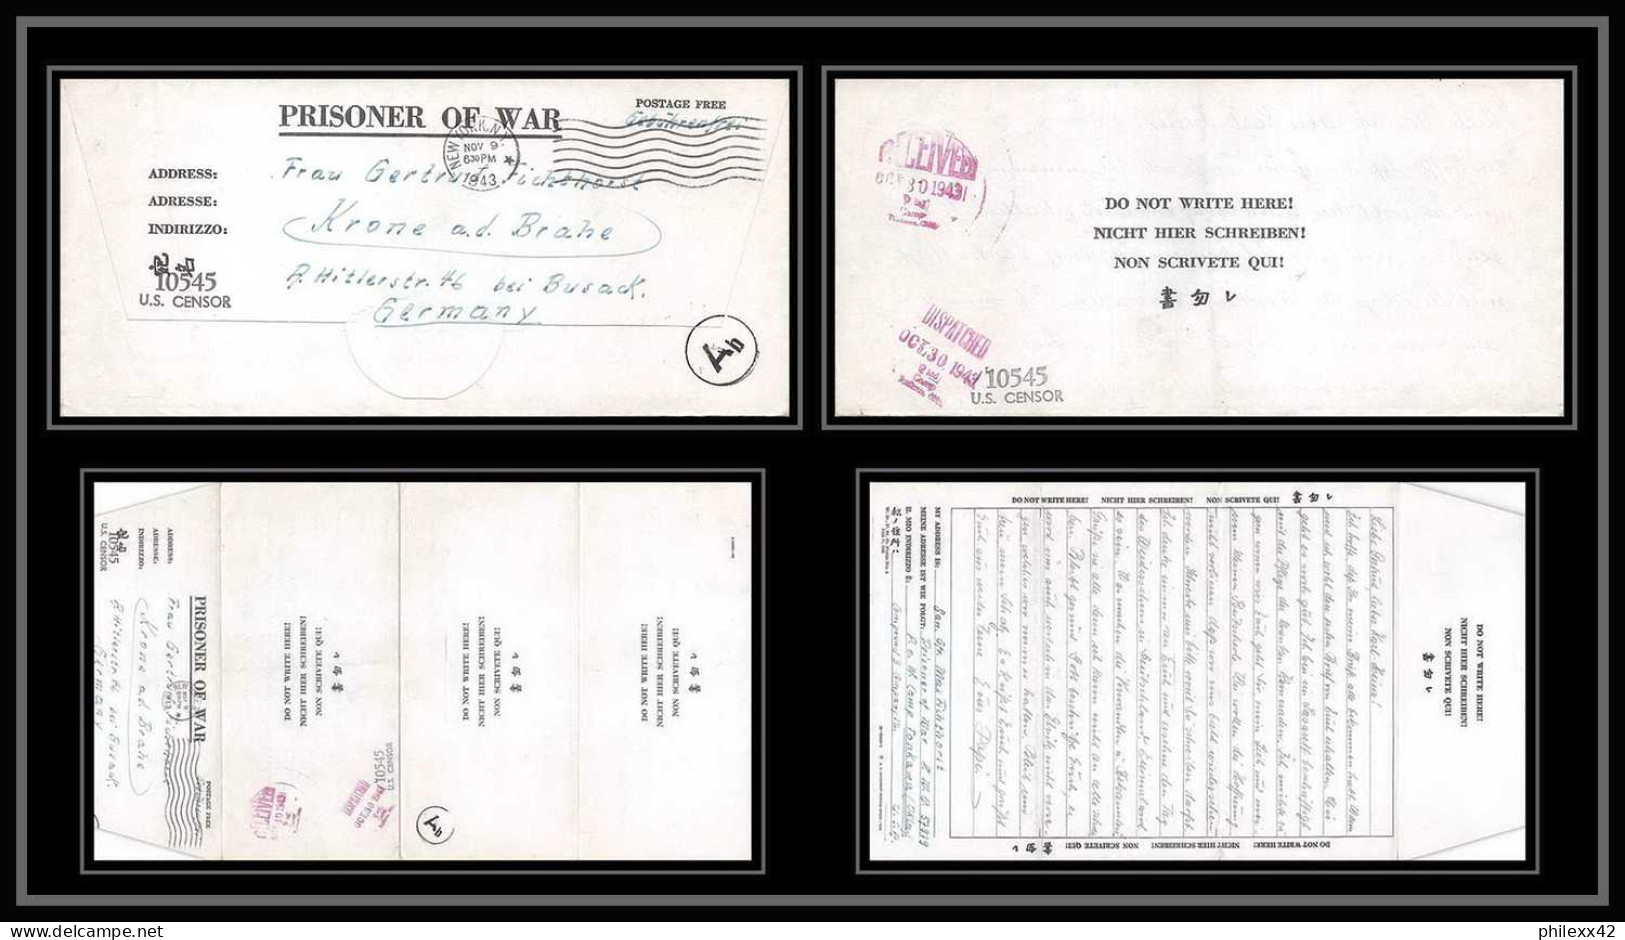 6891/ Lettre (cover Briefe) Tonkawa Japan Usa Allemagne Prisoner Of War Prisonniers 1943 Censuré Censor 10545 - Franchise Militaire